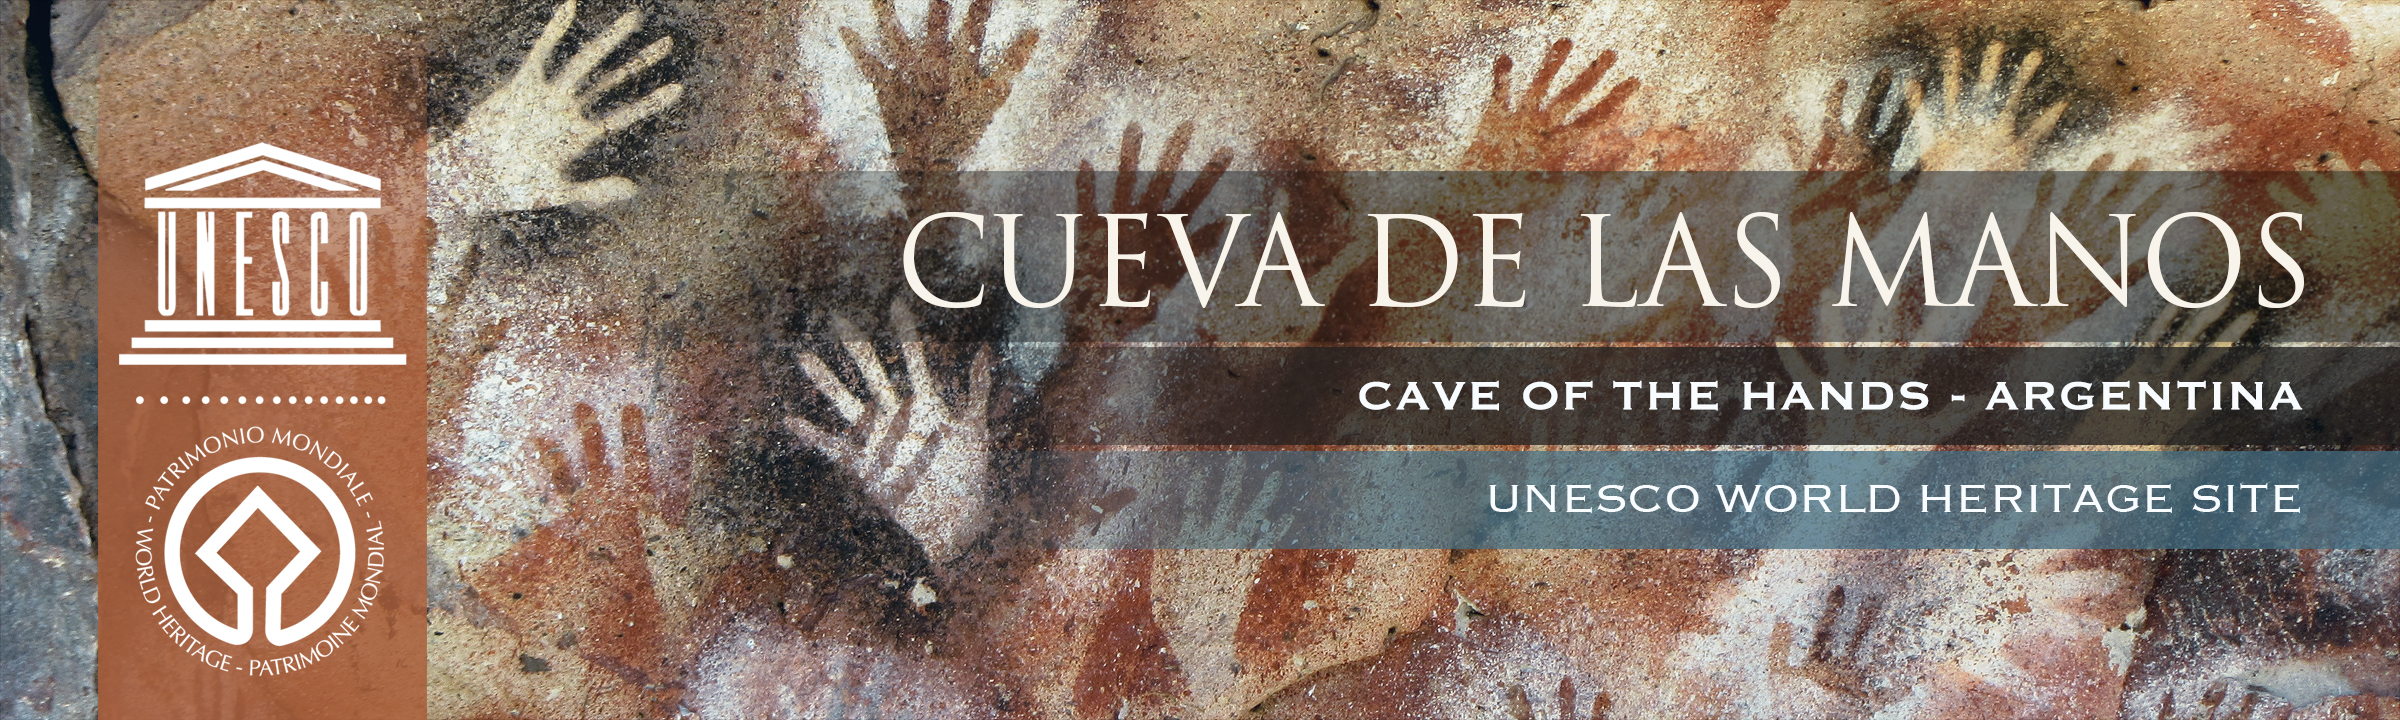 Rock Art Cueva de las Manos Cave of the Hands Archaeology Argentina UNESCO World Heritage Site